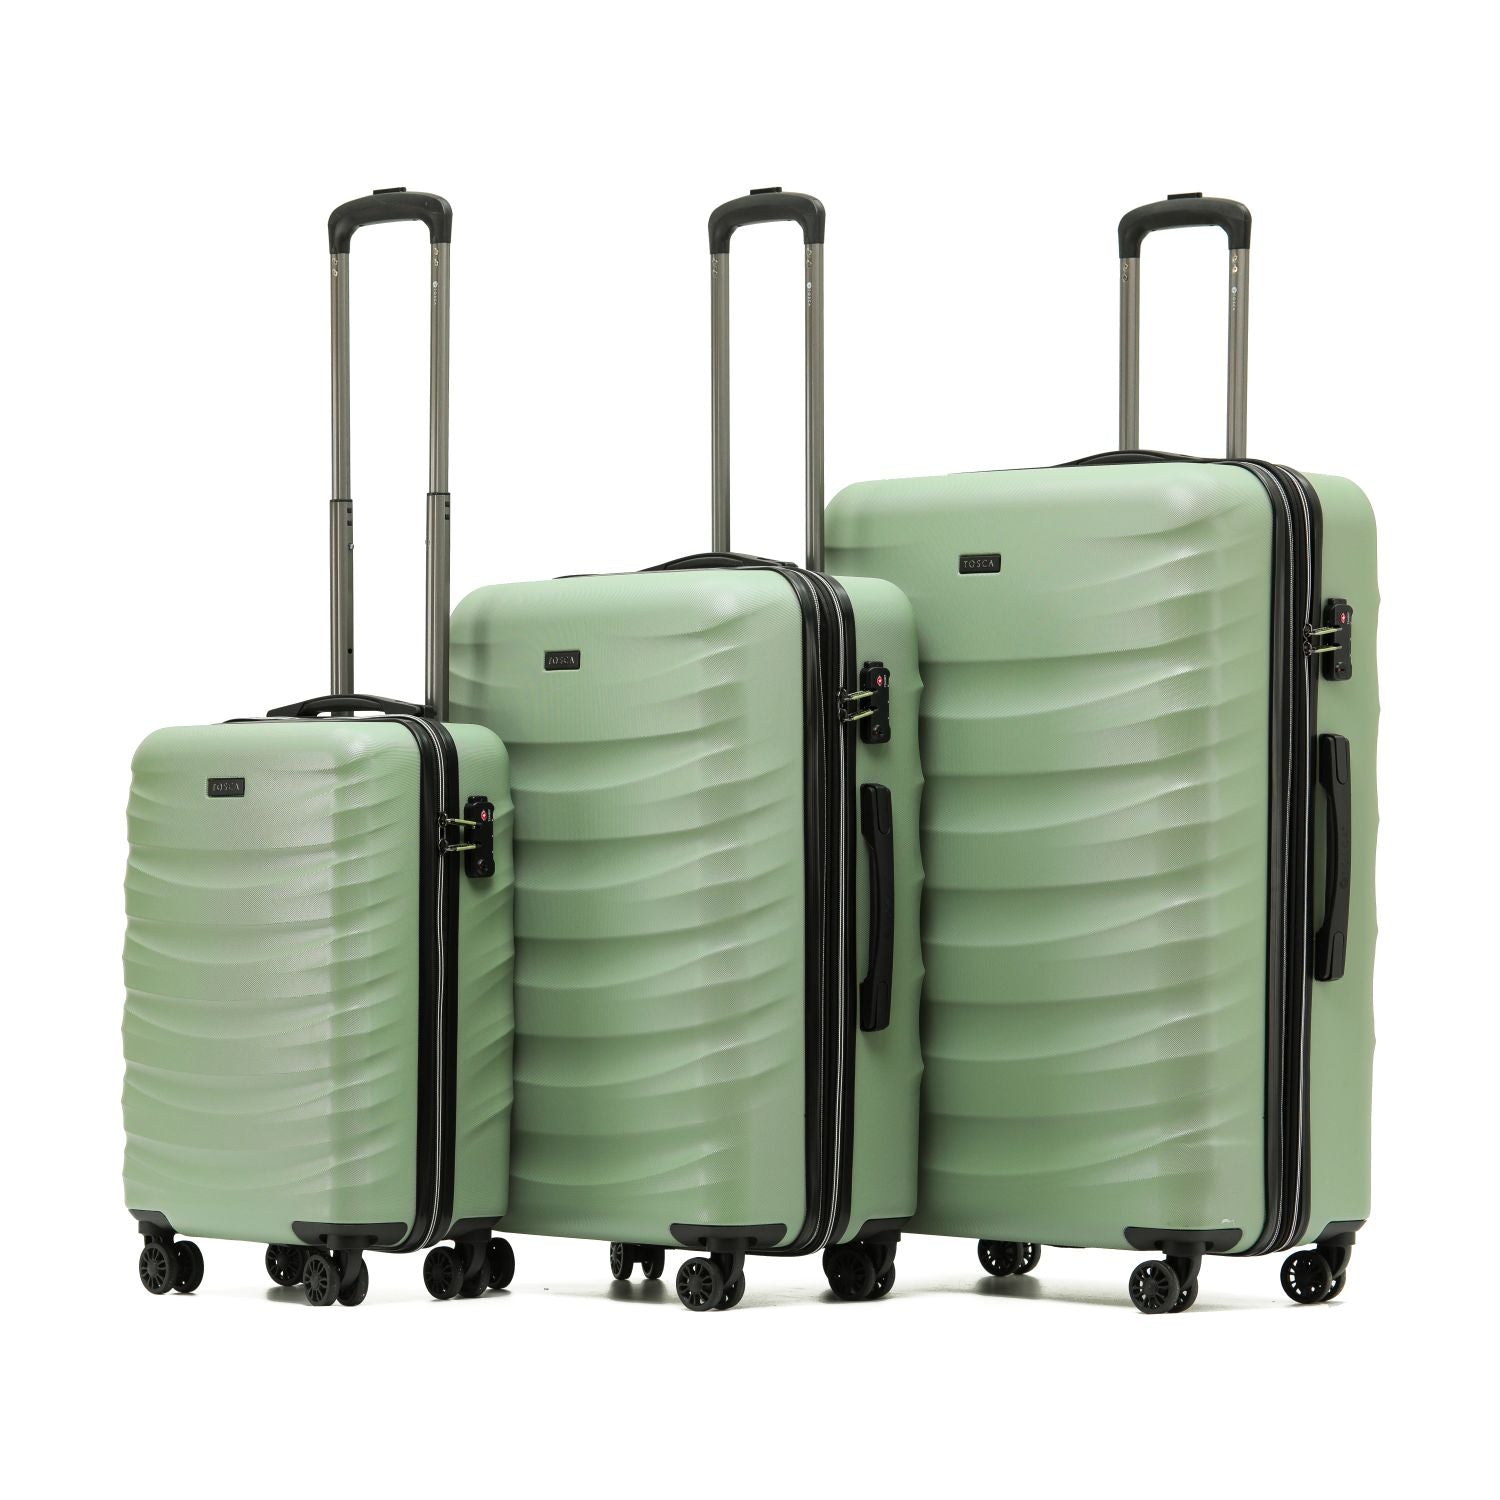 Tosca - Intersteller set of 3 suitcases - Oil Green-1